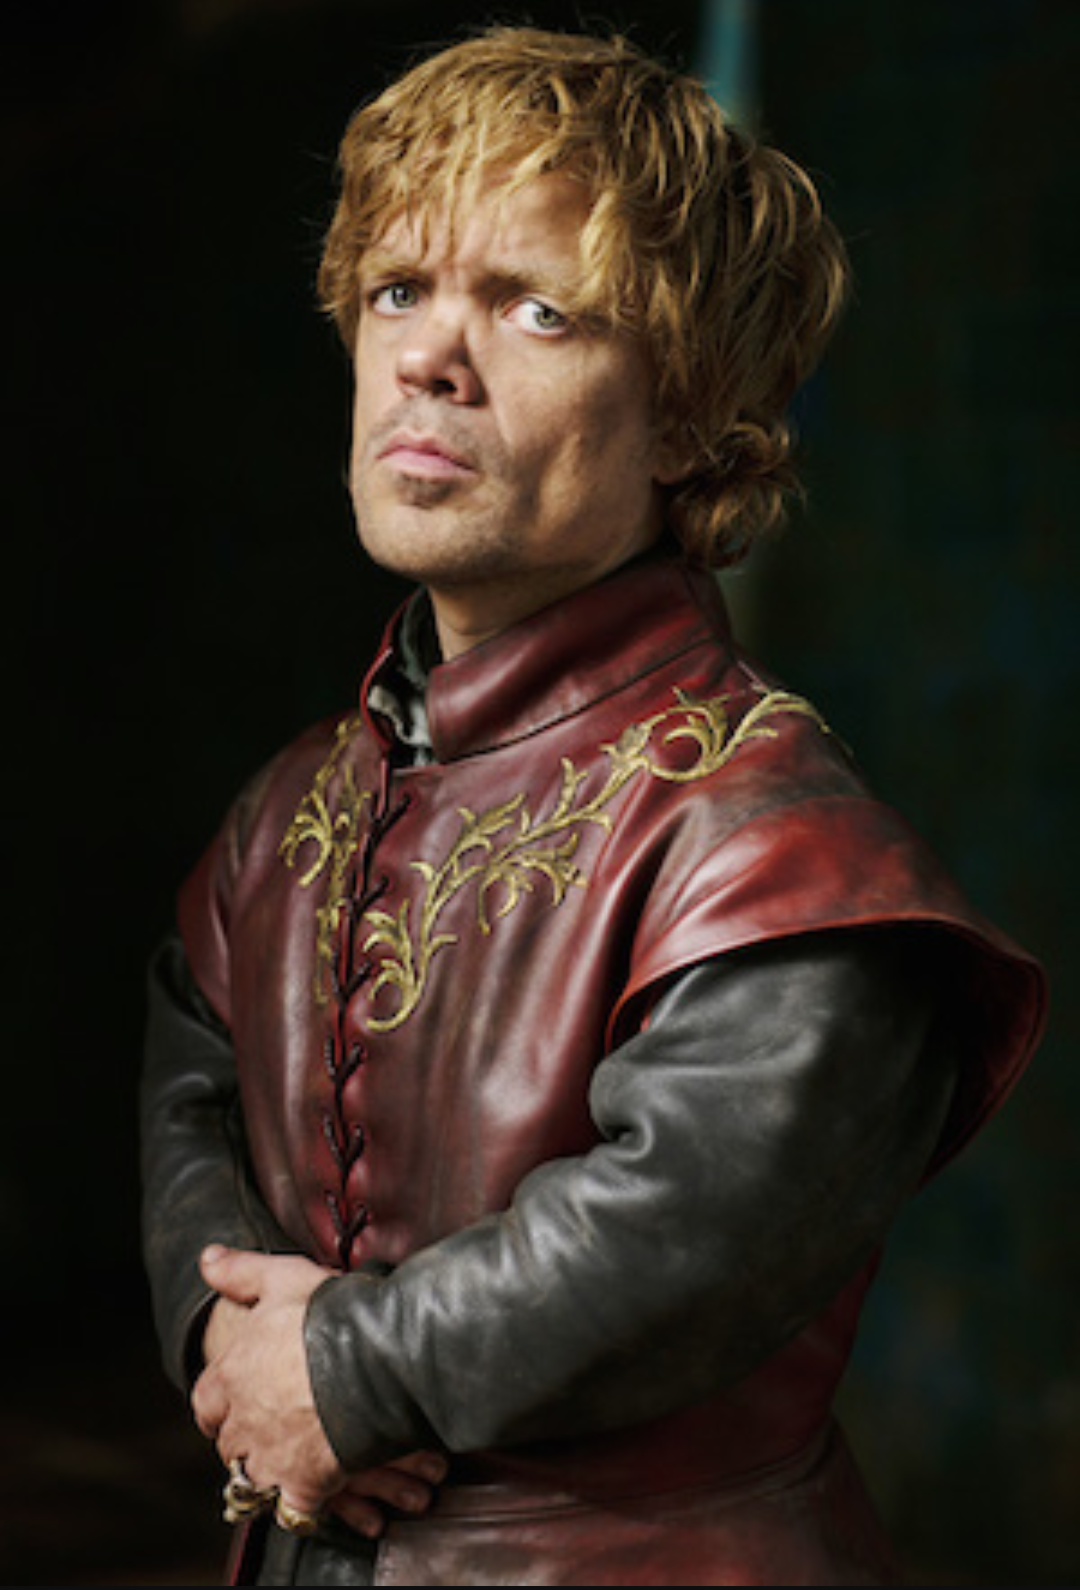 L'attore statunitense Peter Dinklage nei panni di Tyrion Lannister